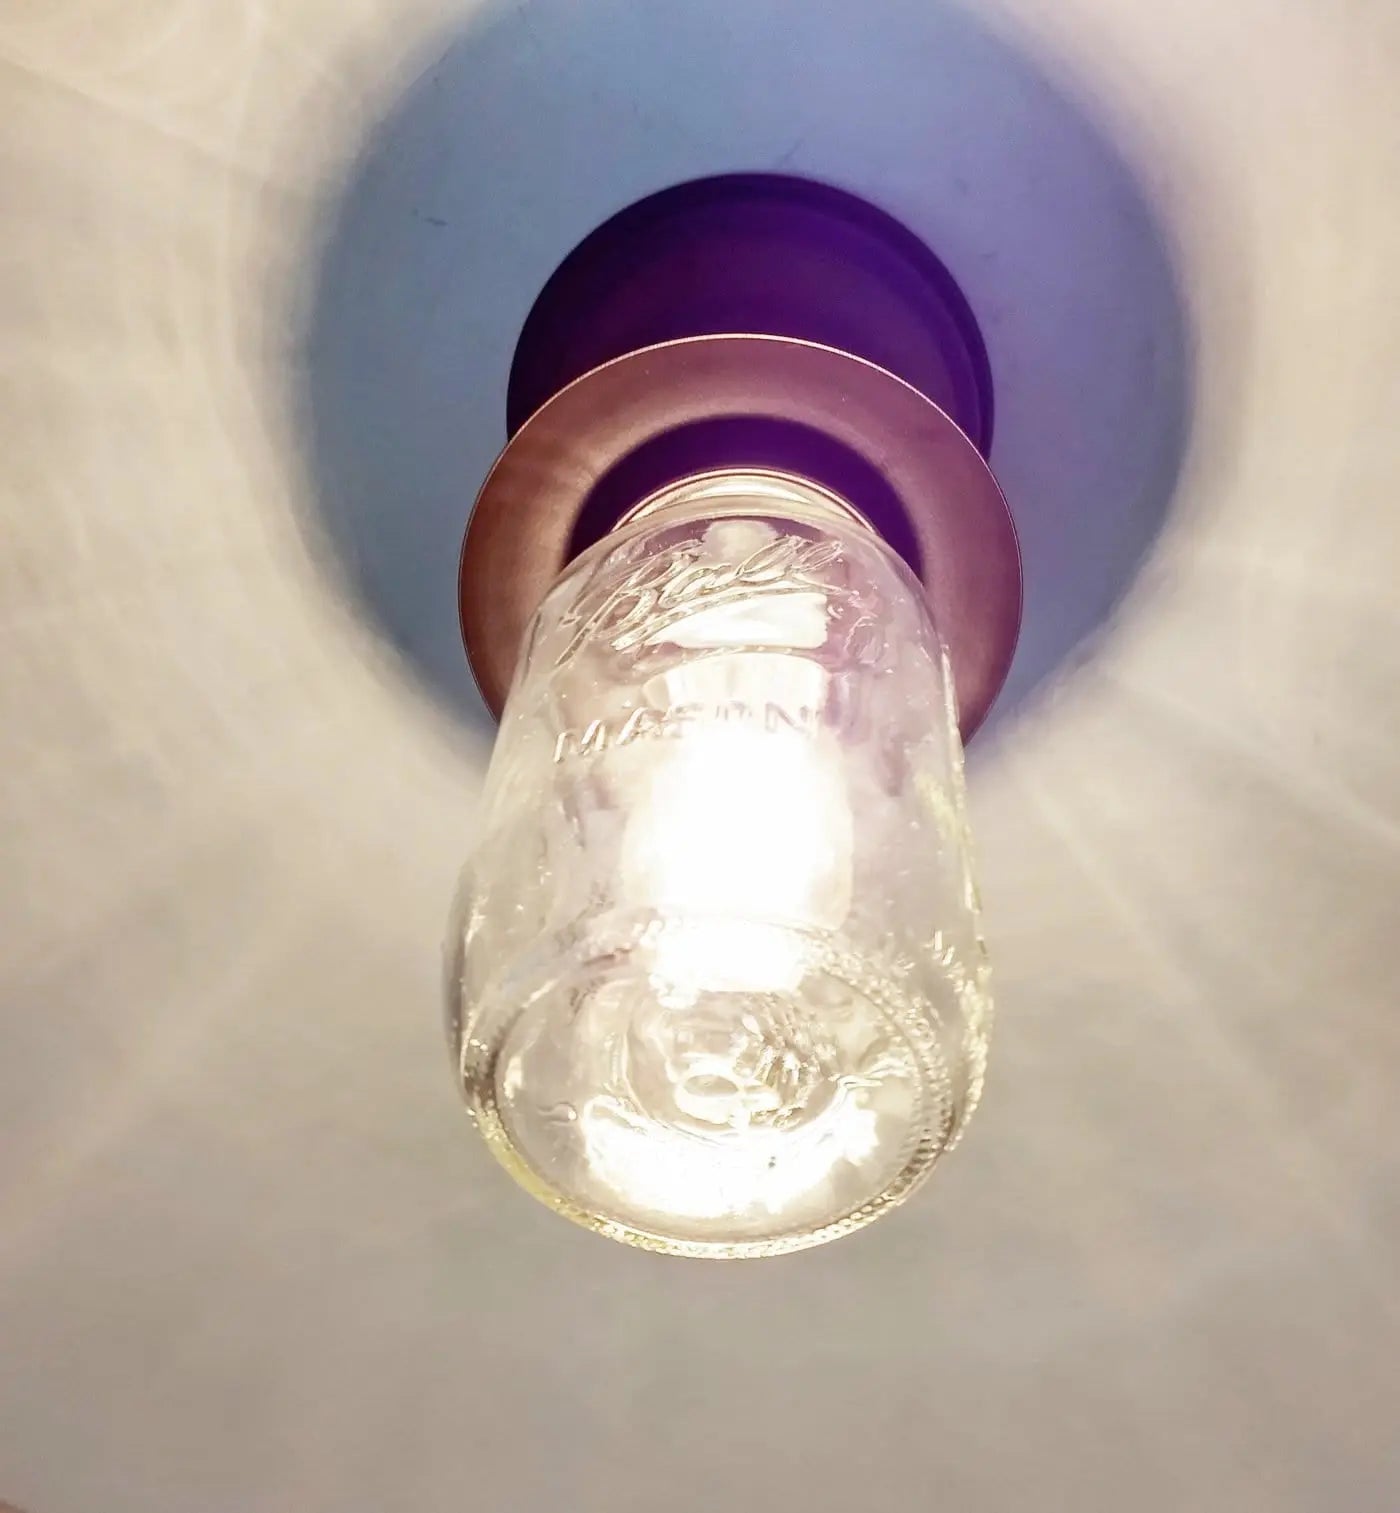 Mason Jar Exterior Outdoor Porch Farmhouse Ceiling Light Fixture - The Lamp Goods